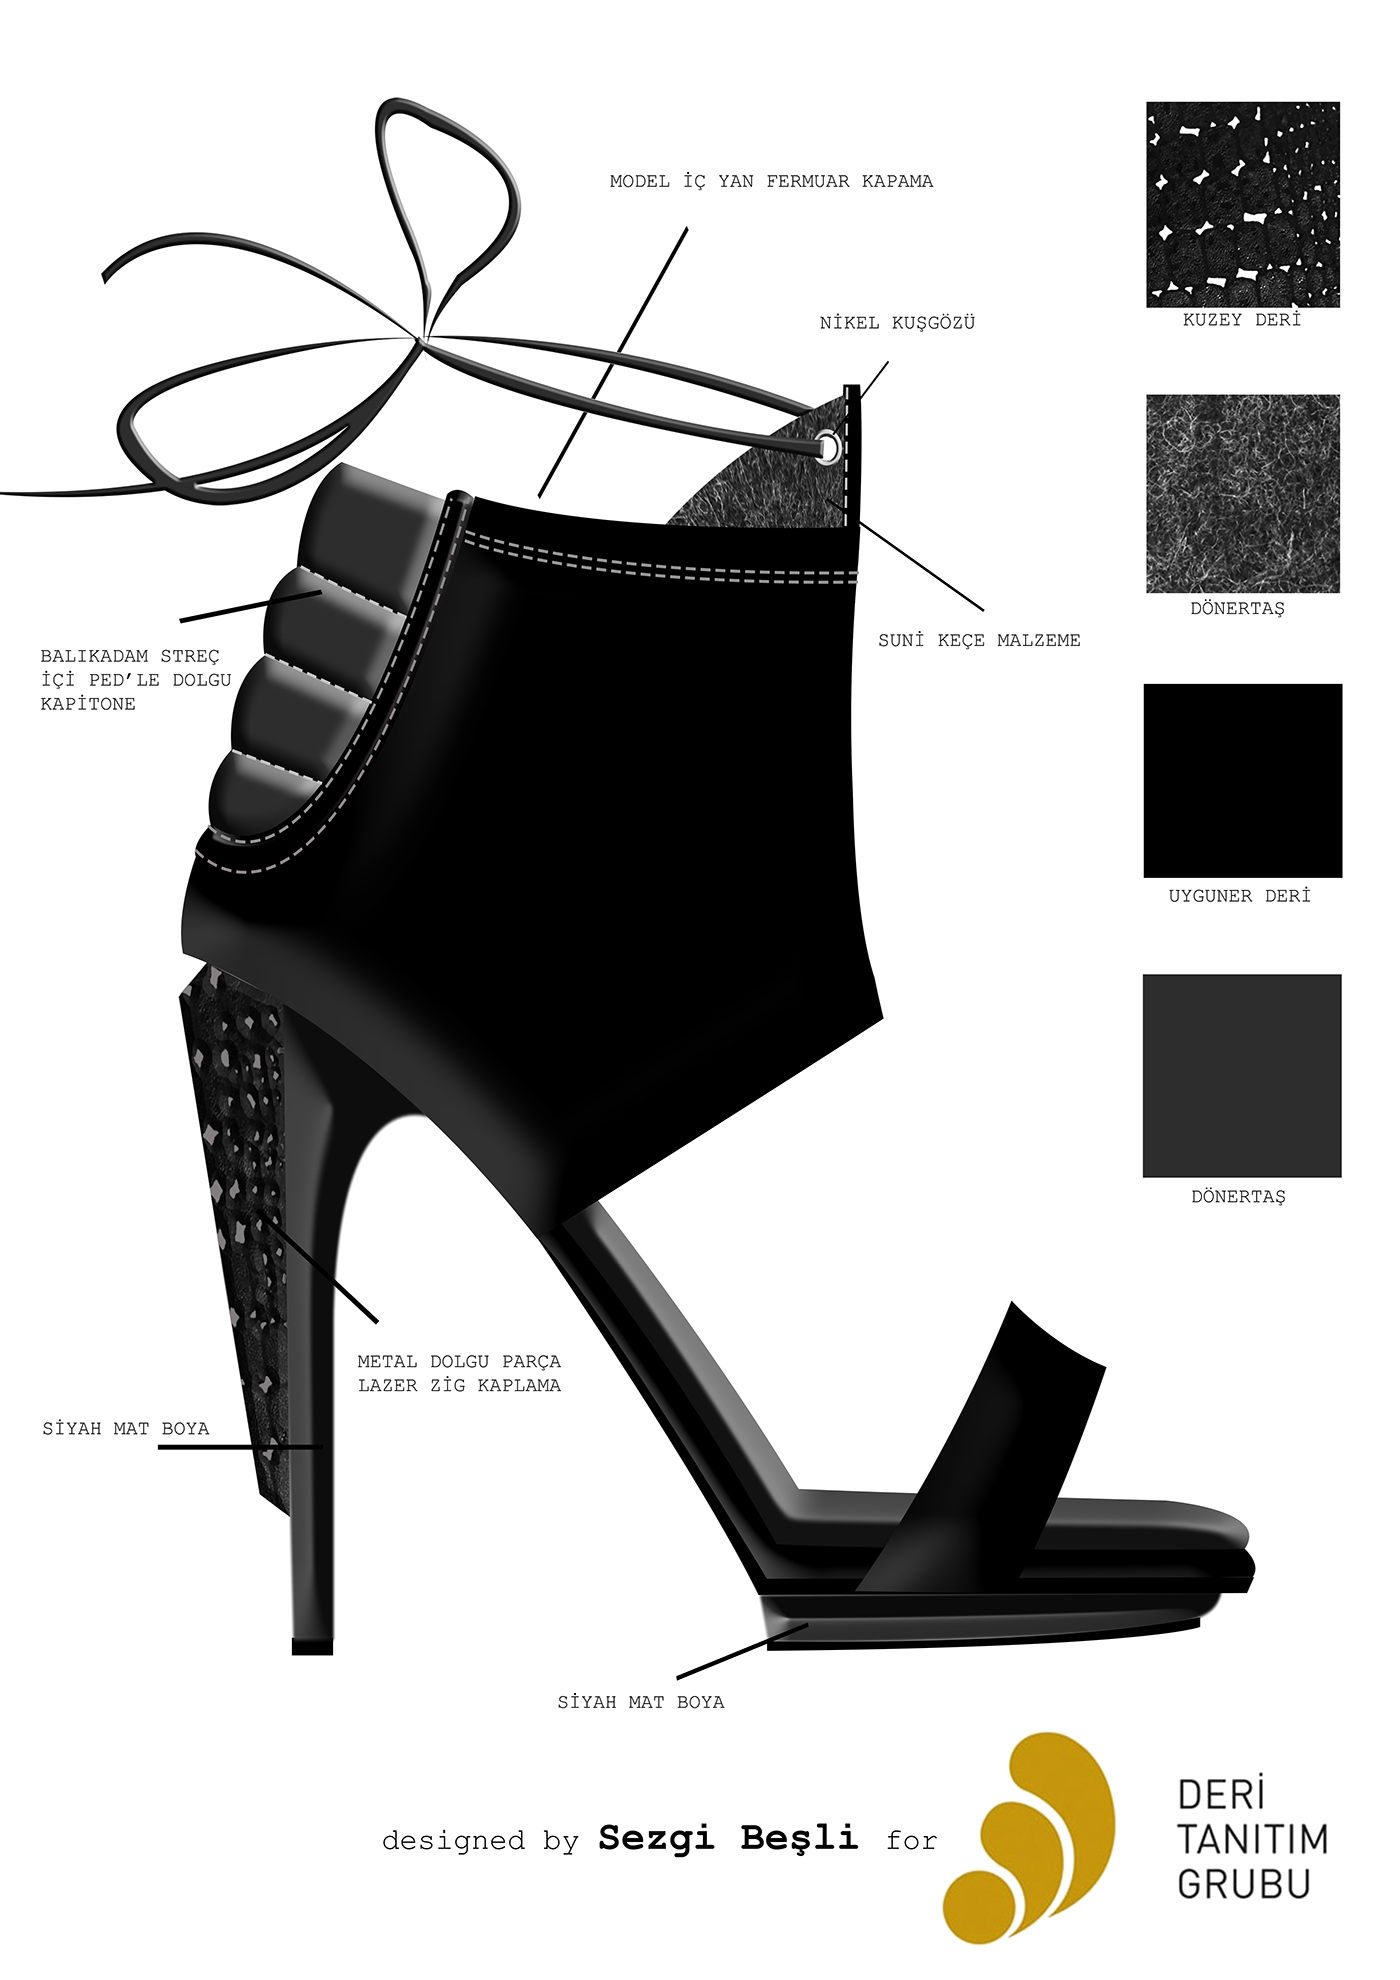 shoe shoes footwear design footweardesign shoedesign leather higheeledshoes